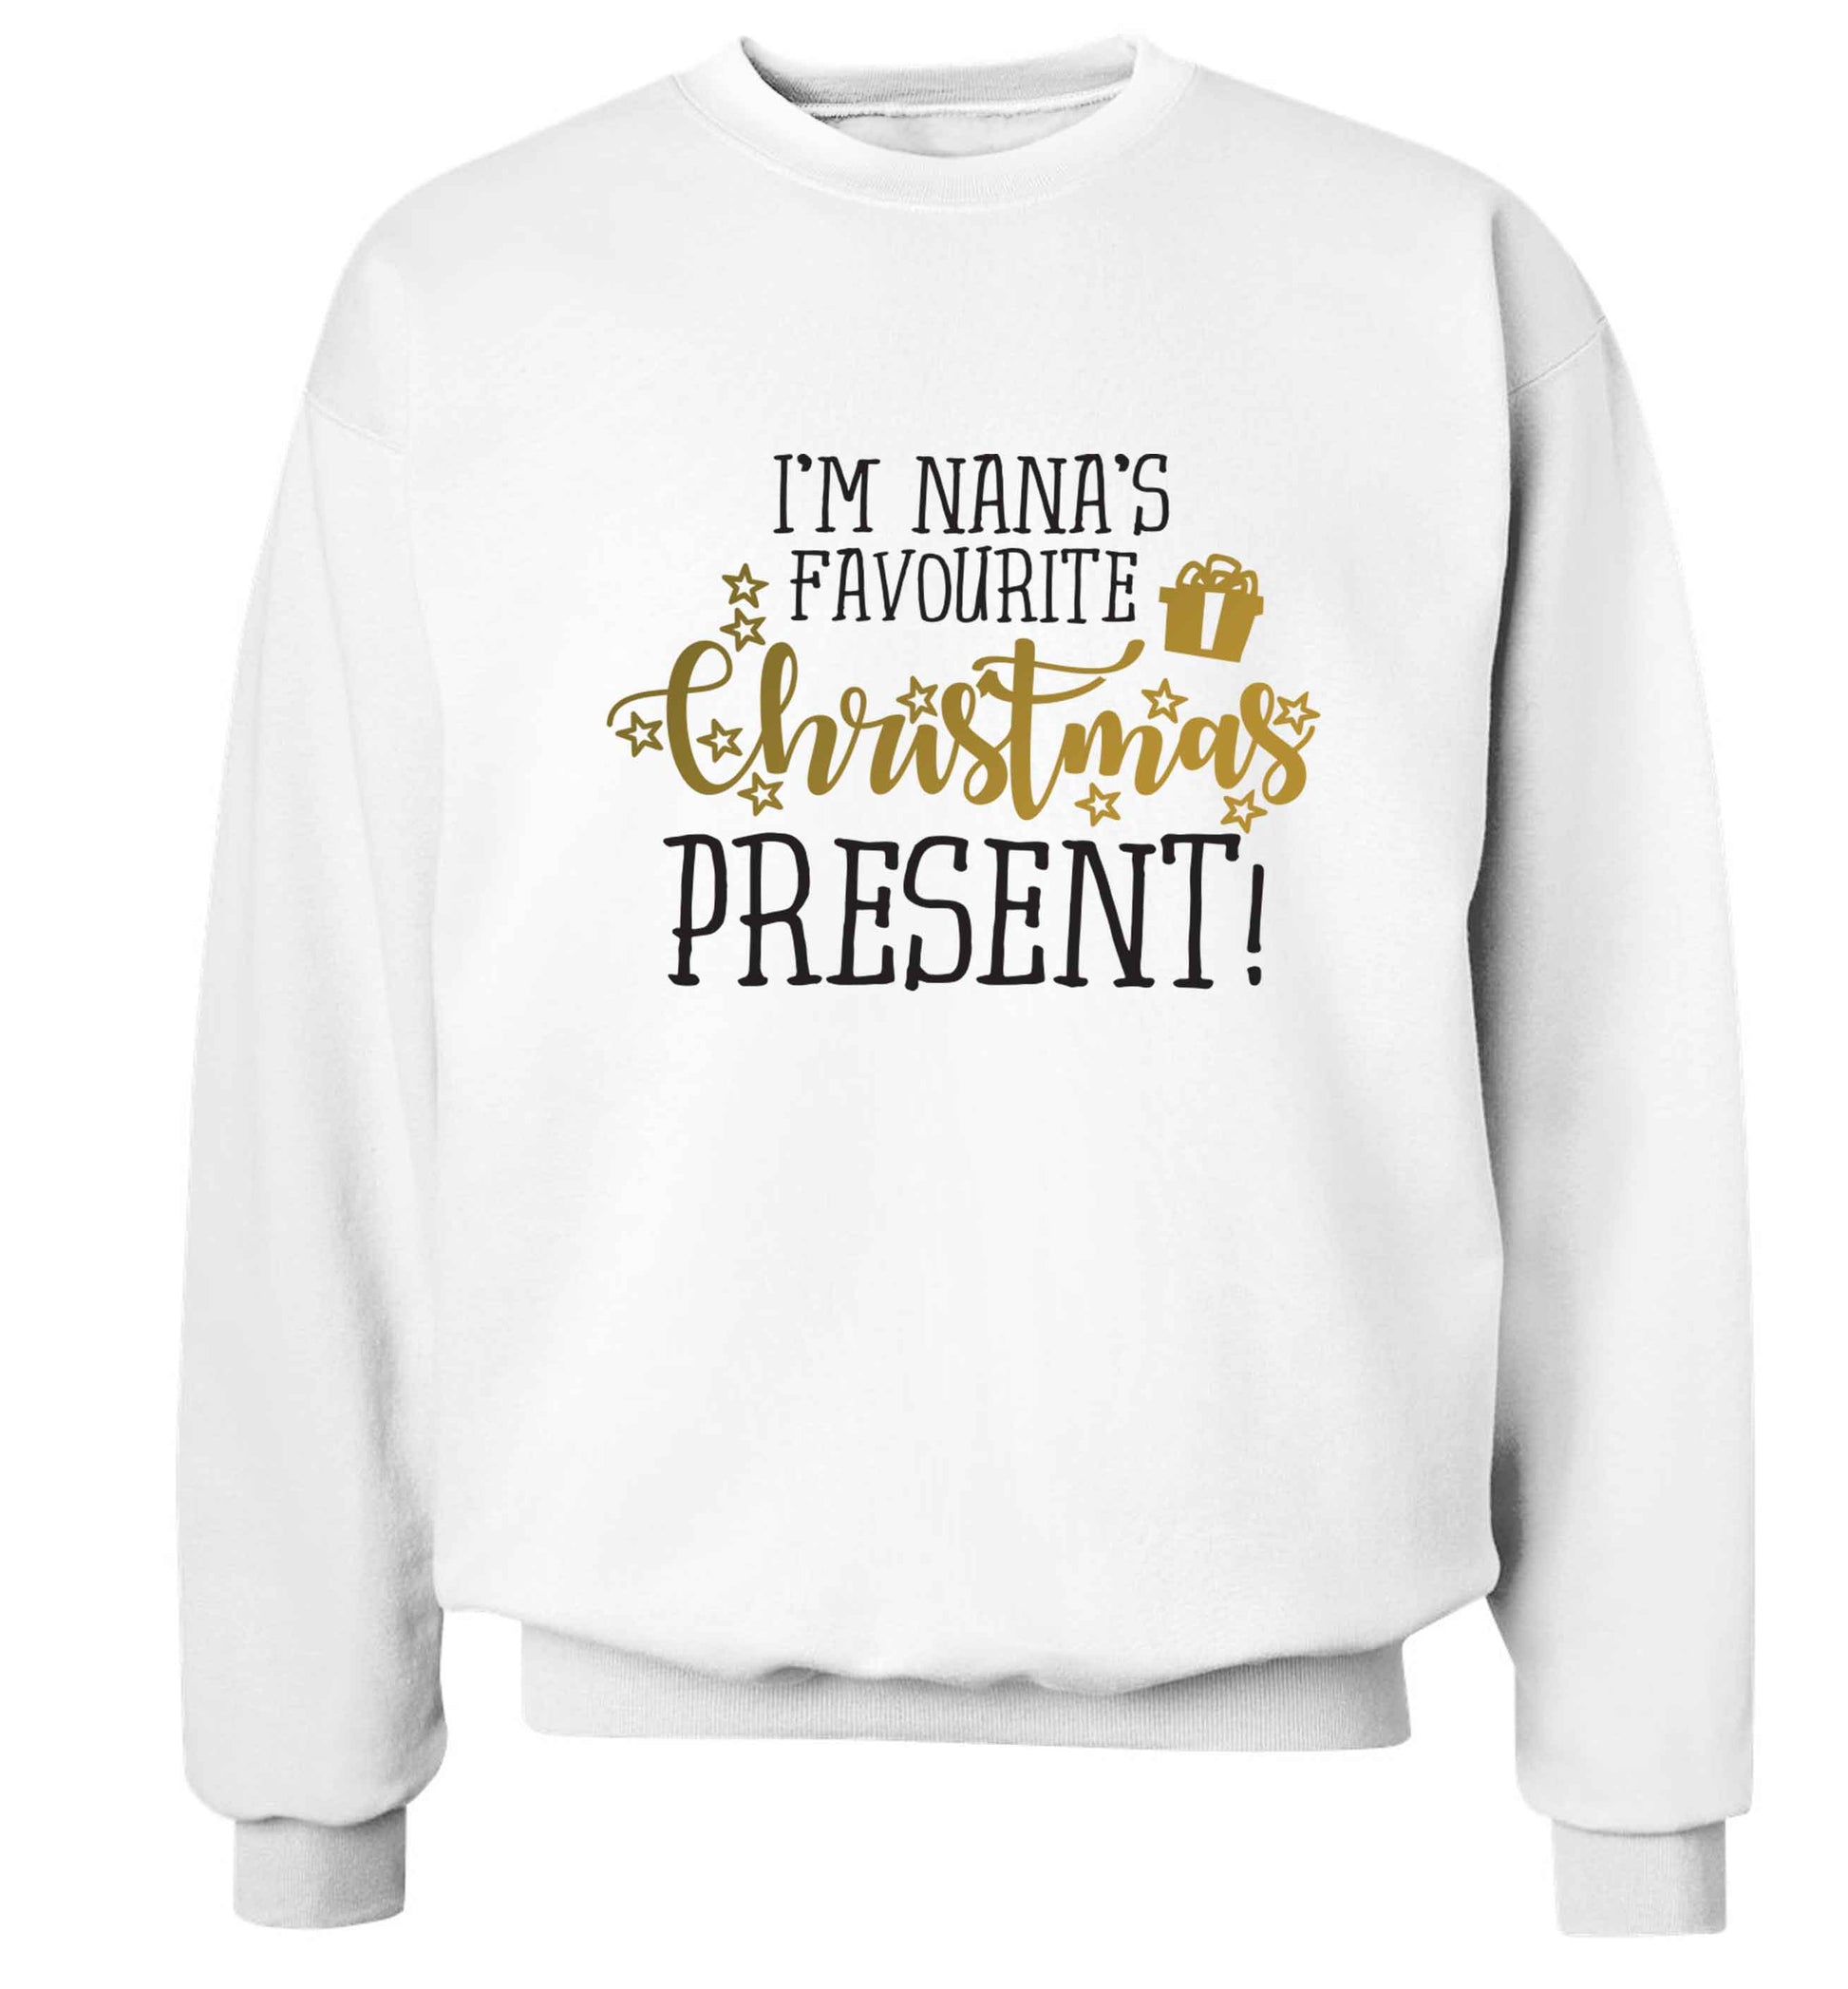 Nana's favourite Christmas present Adult's unisex white Sweater 2XL